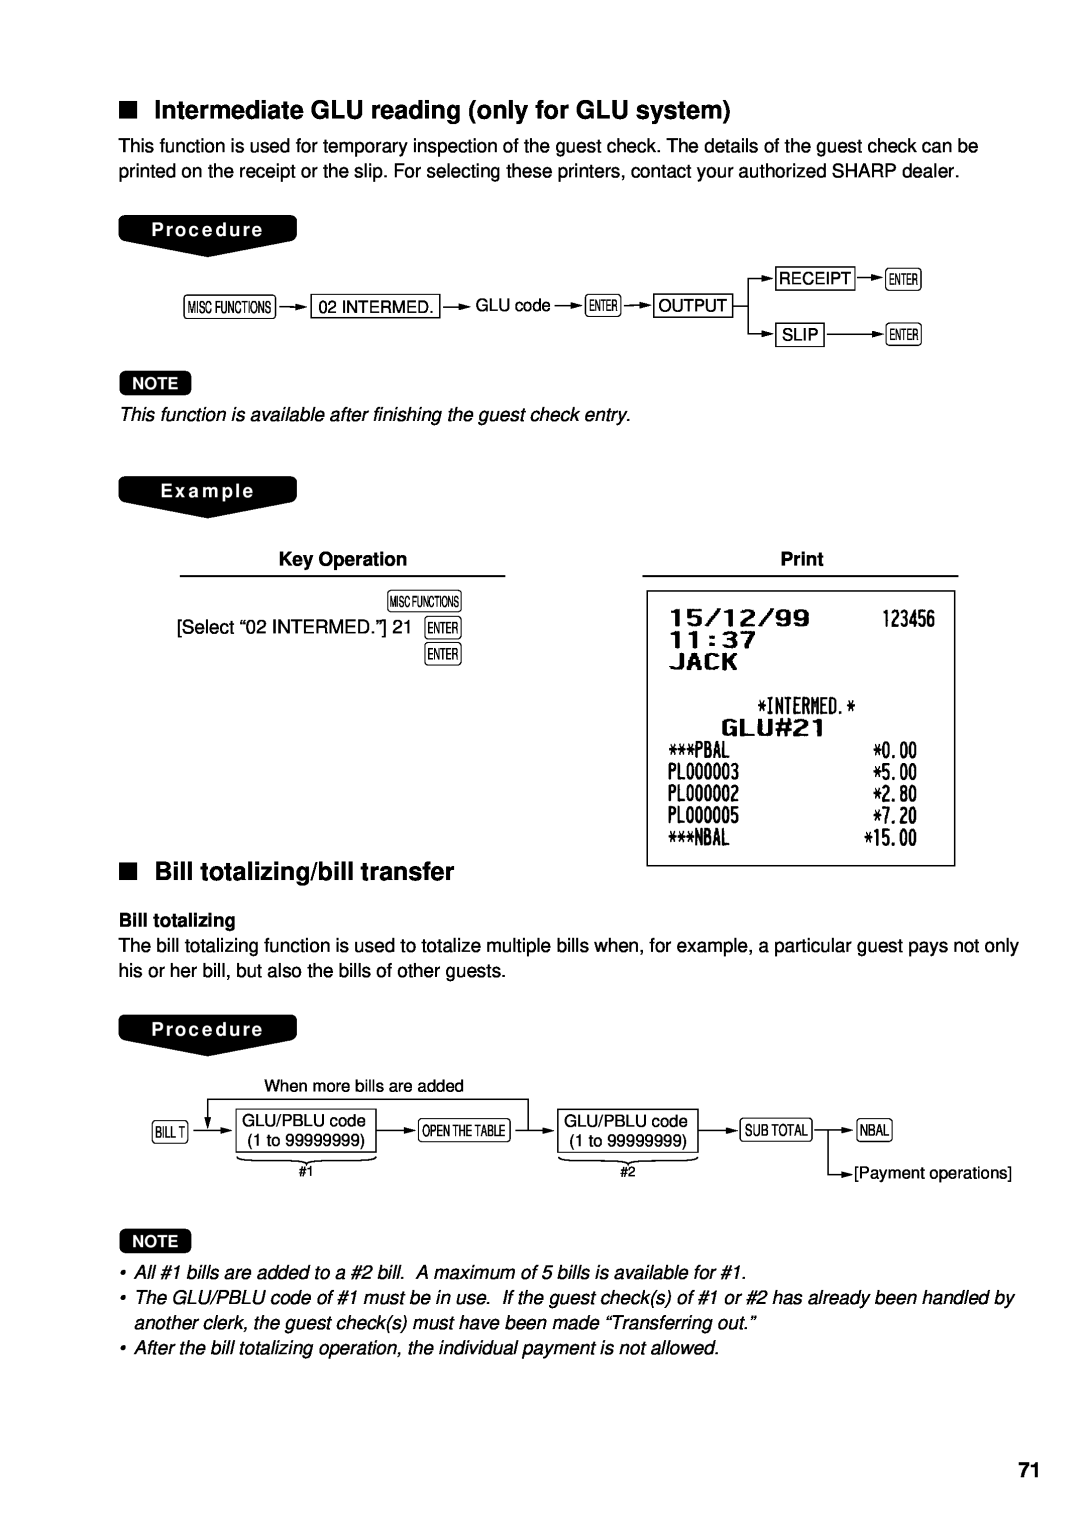 Sharp UP-3300 Intermediate GLU reading only for GLU system, Bill totalizing/bill transfer, Procedure, Example, Print 